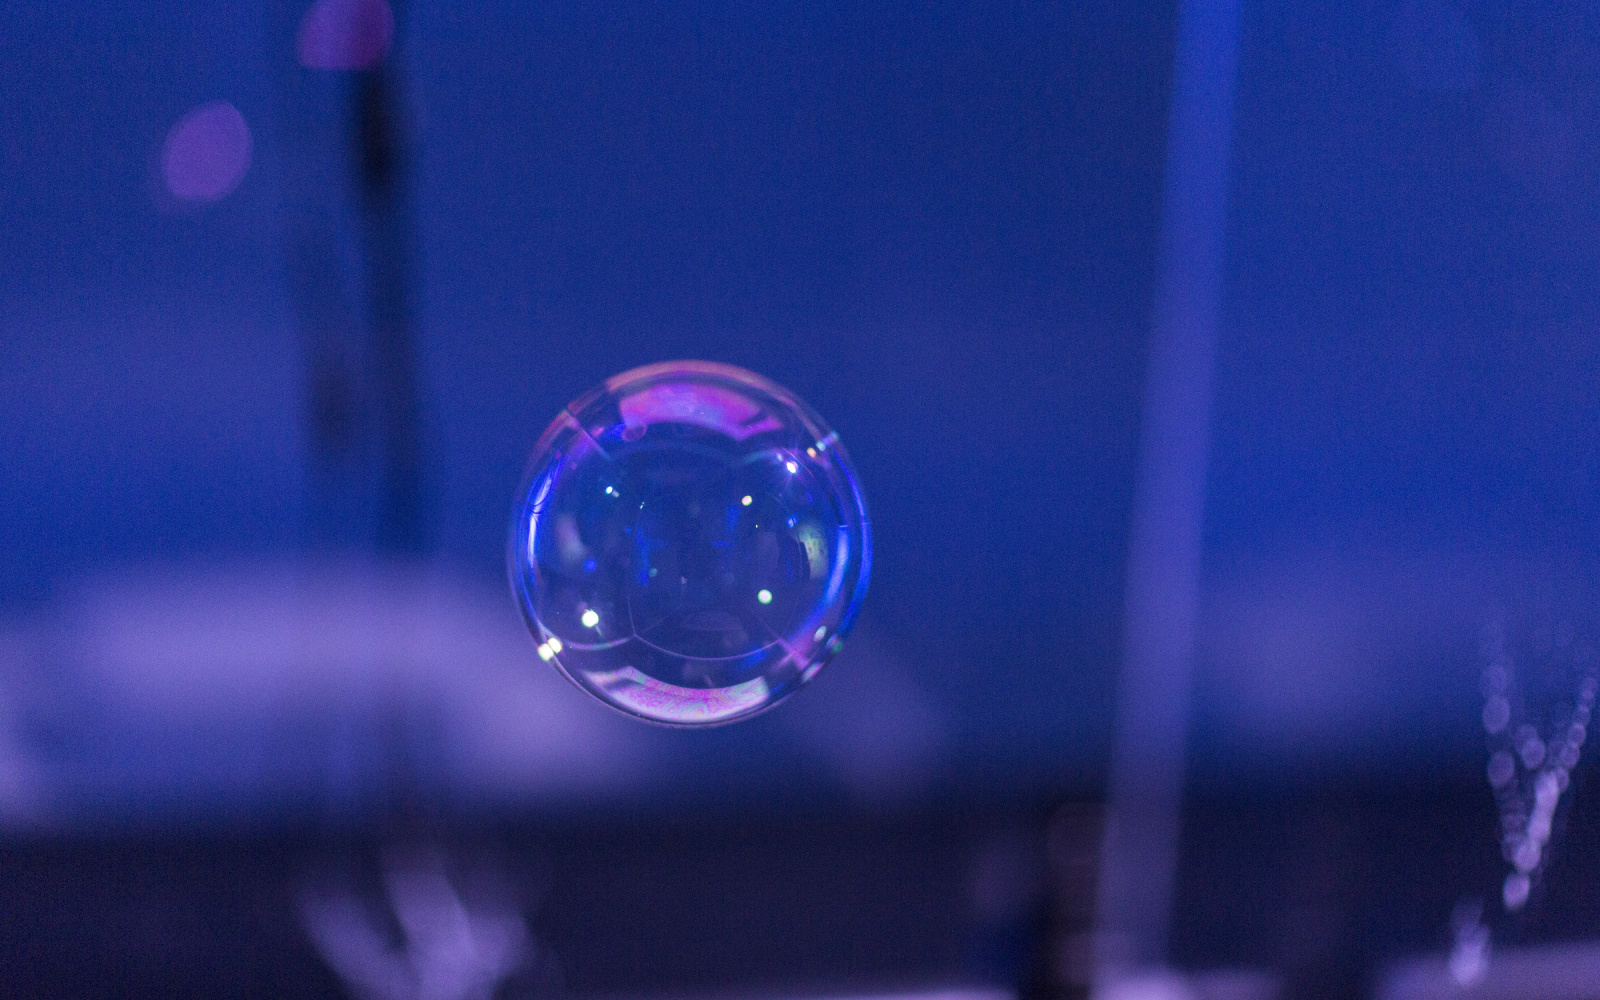 A soap bubble against a violet, dark background. 